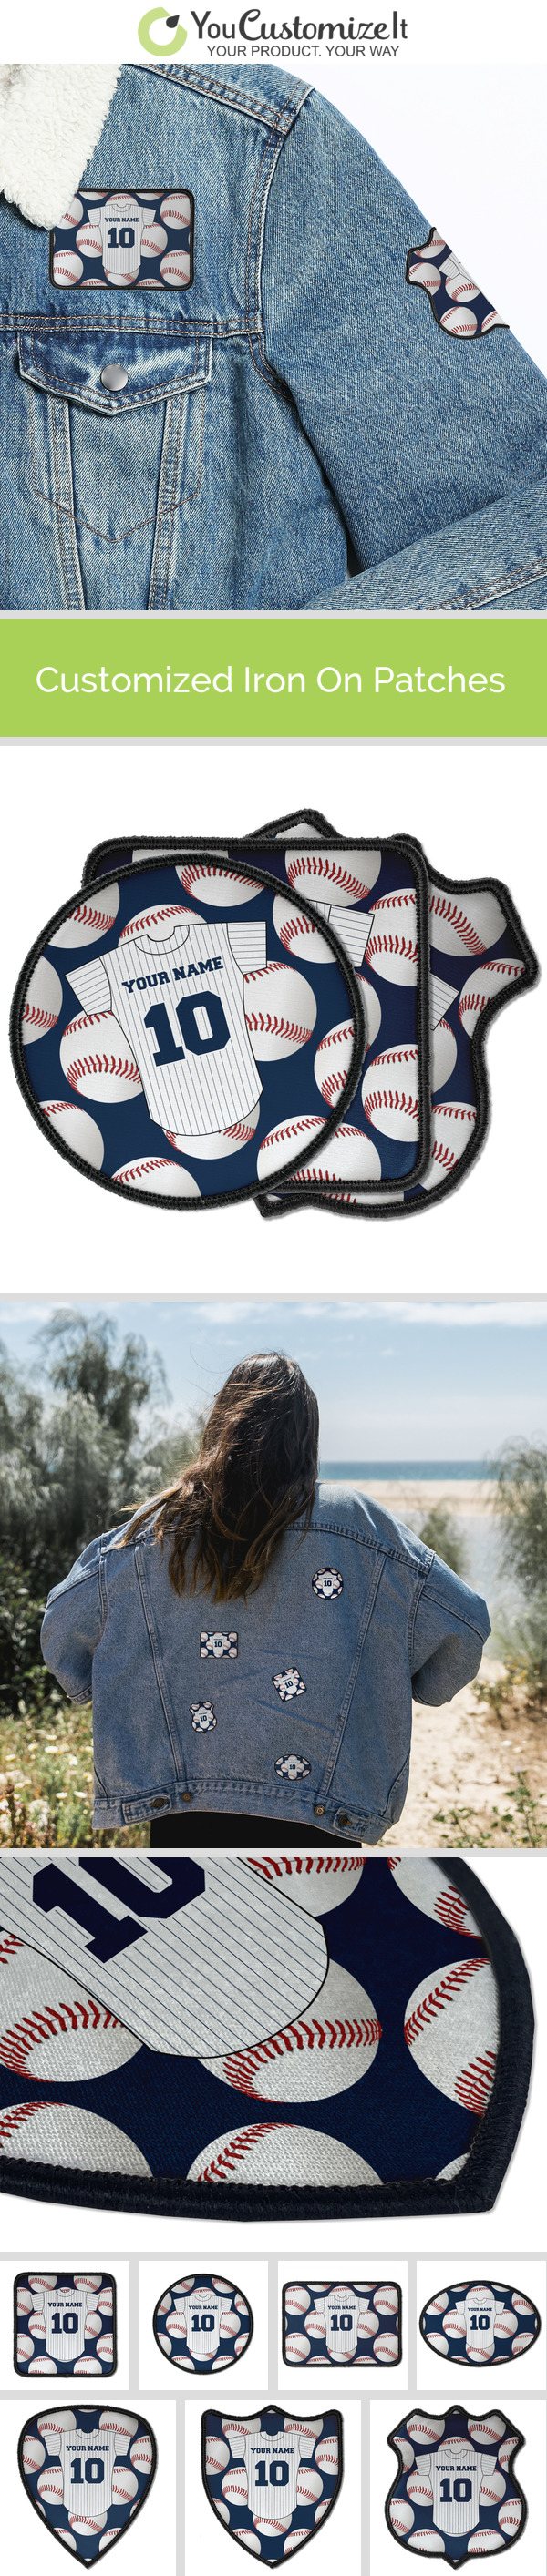 Baseball Jersey Design Custom Iron on Patches